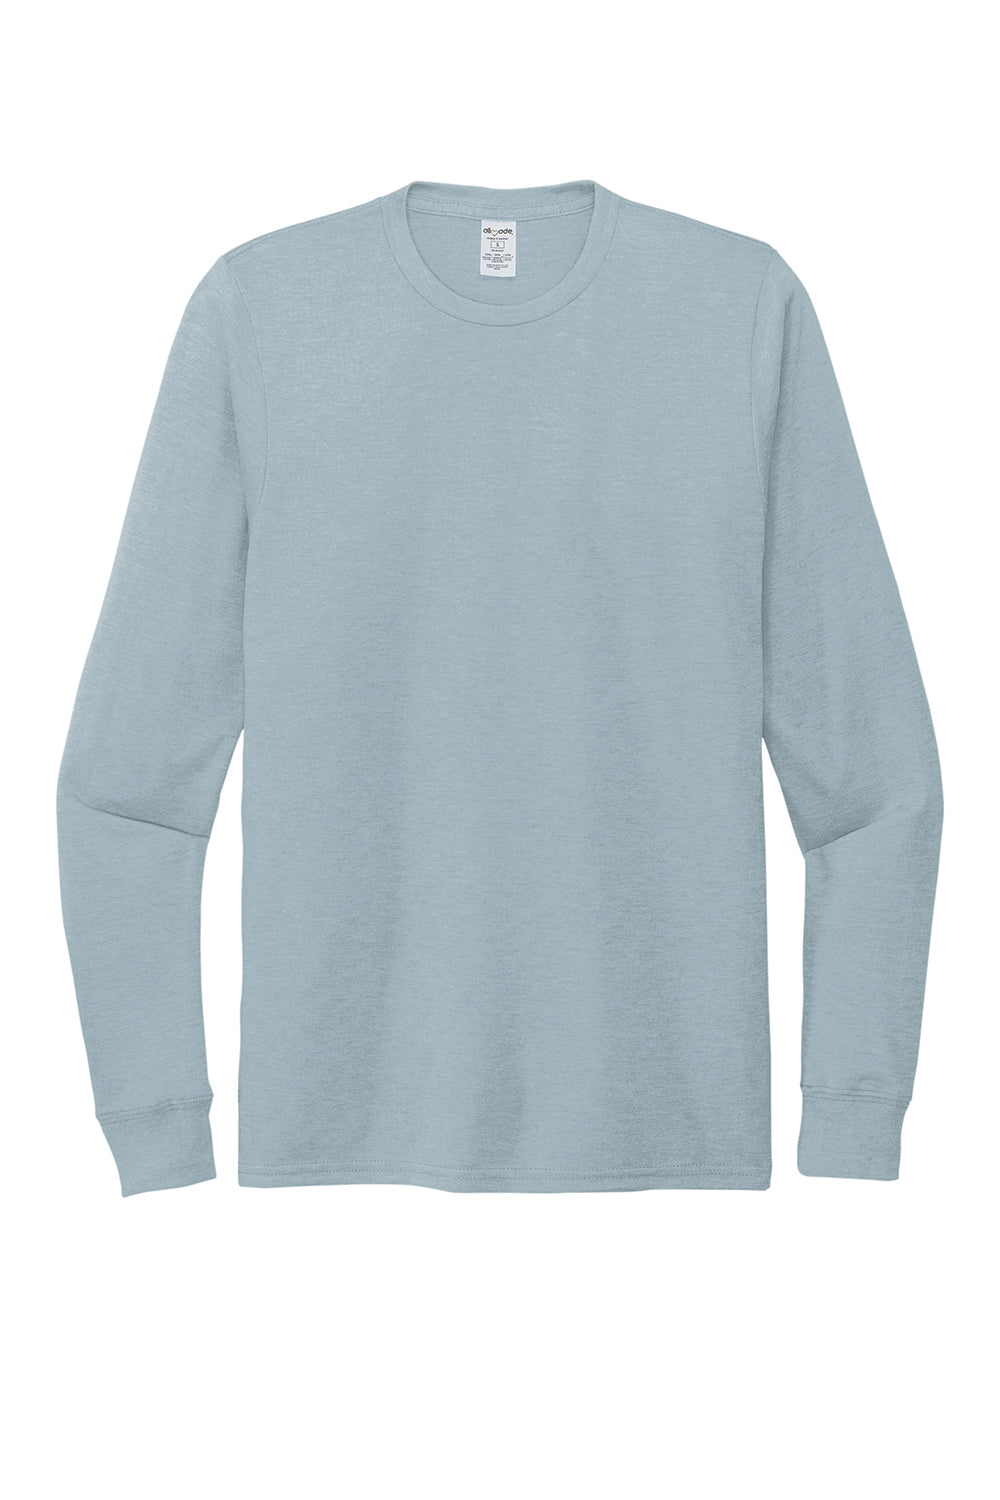 Allmade AL6004 Mens Long Sleeve Crewneck T-Shirt I Like You Blue Flat Front